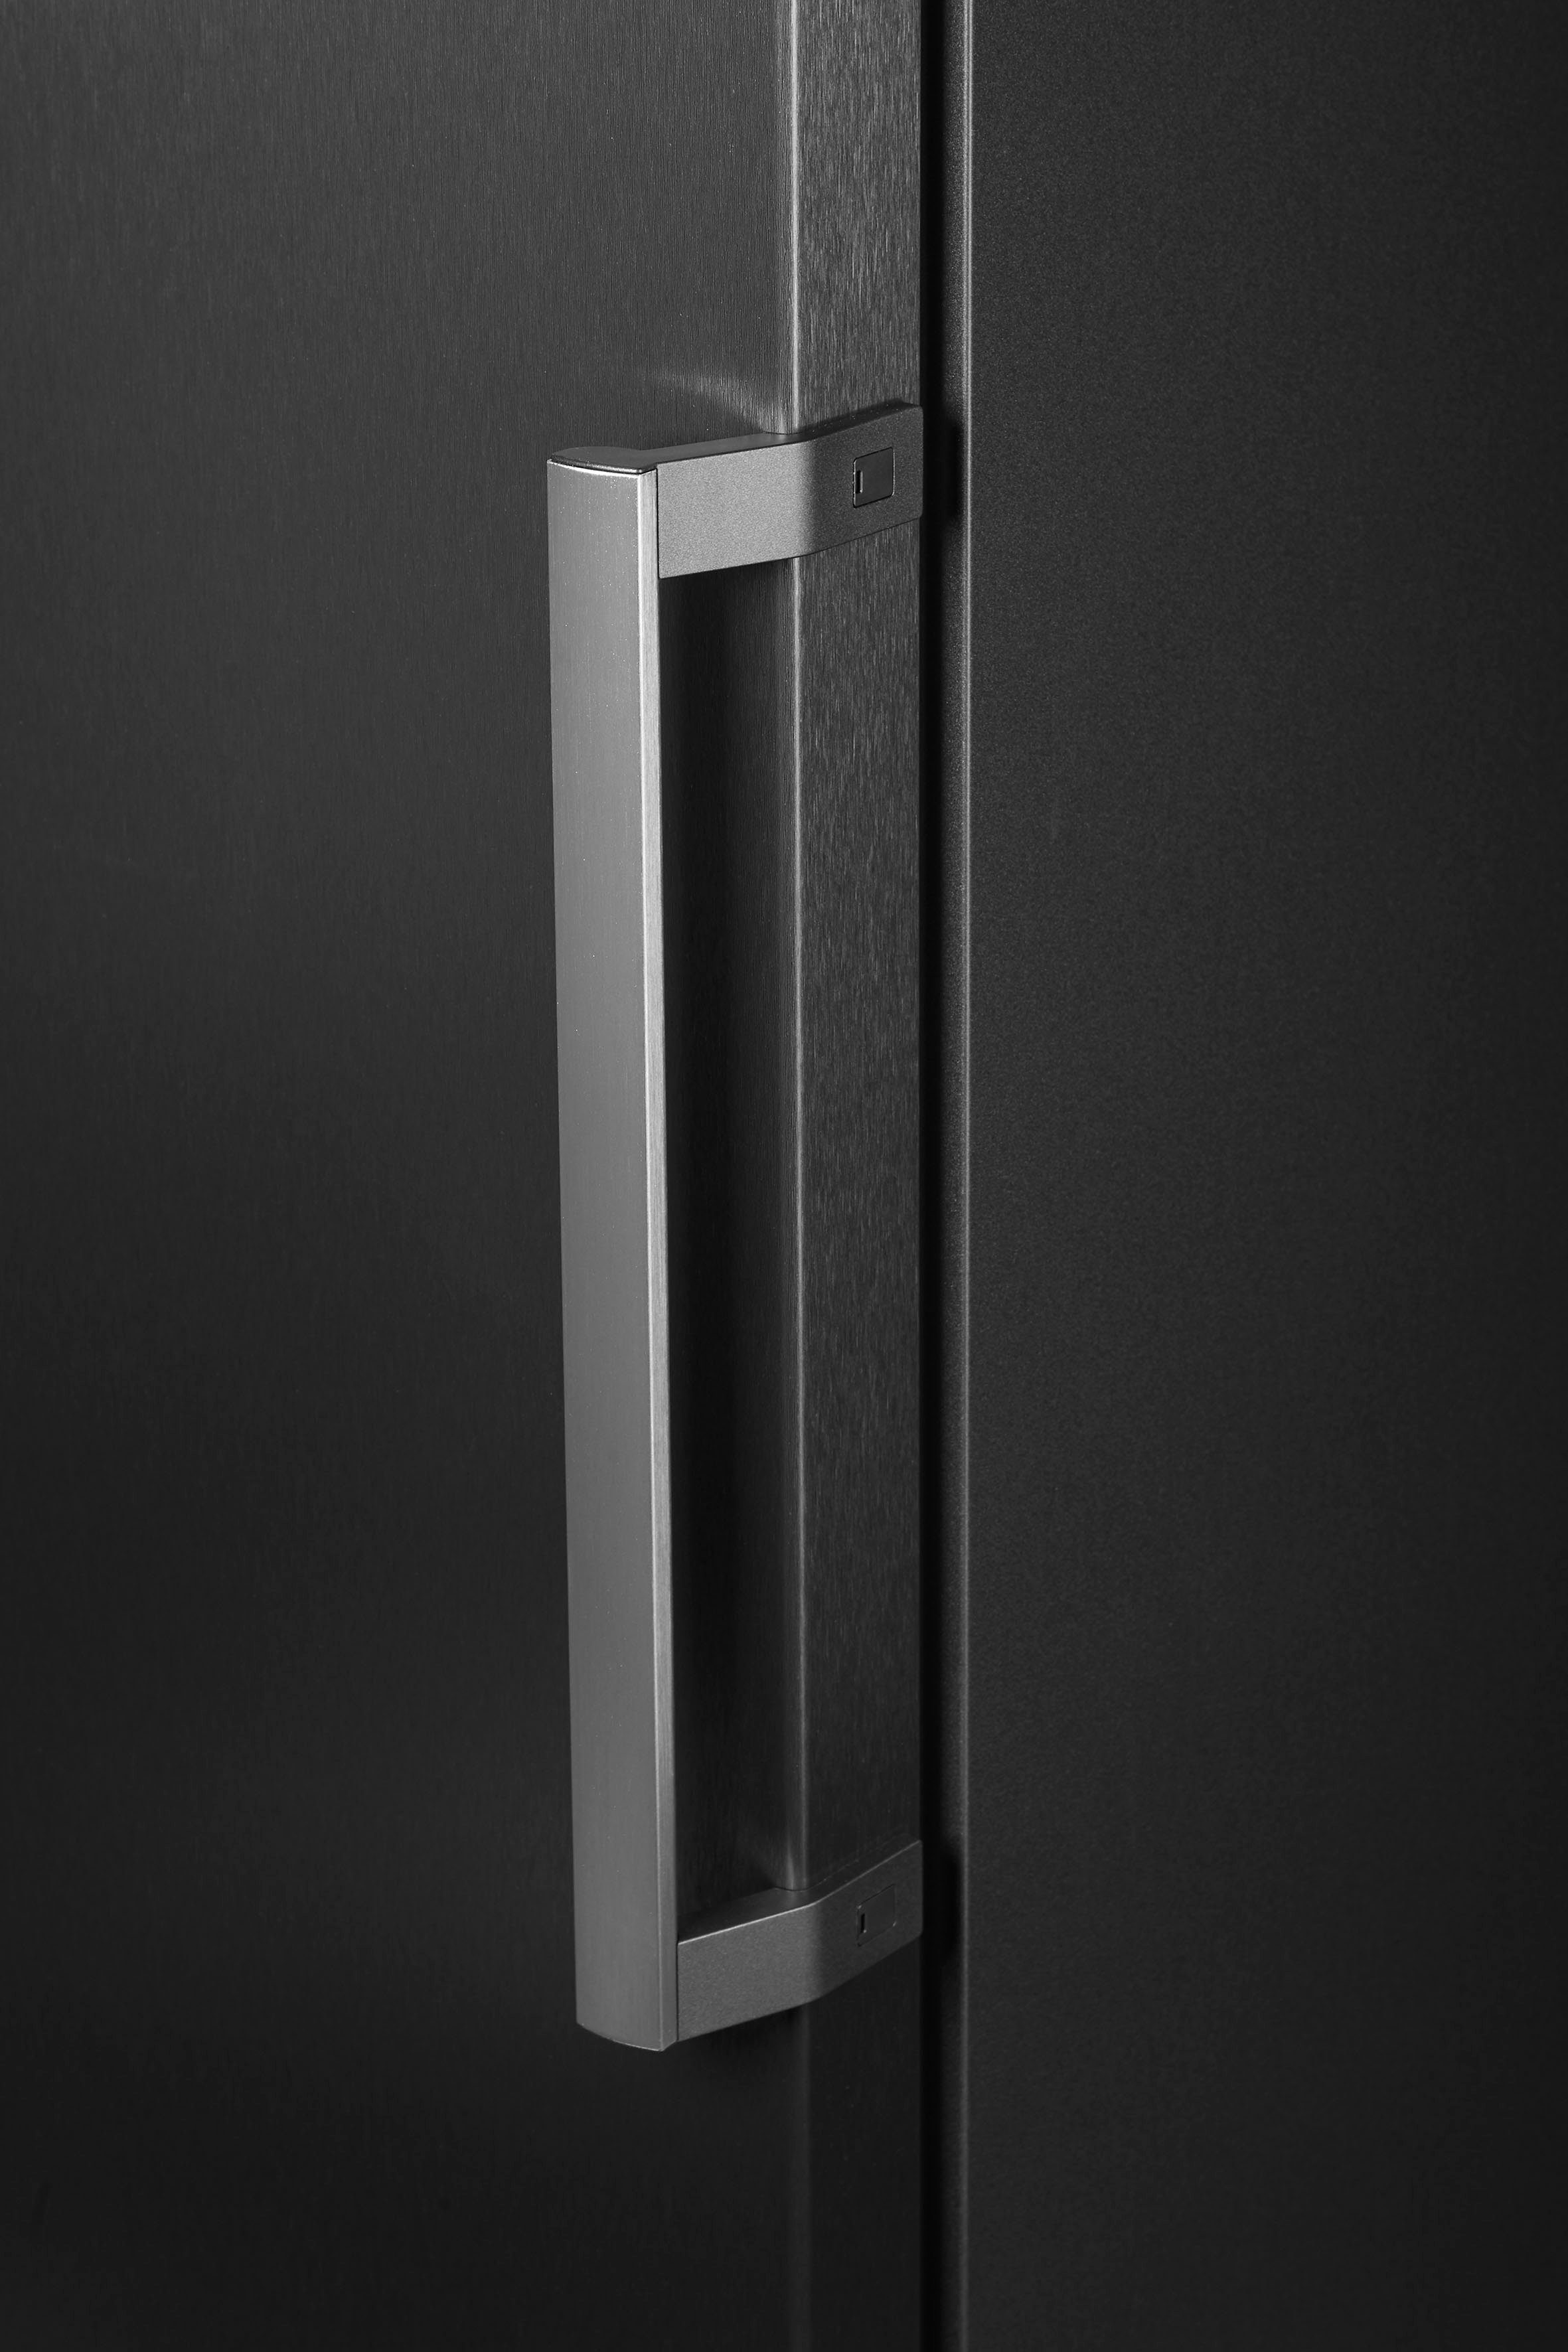 BOSCH Kühlschrank cm 186 cm KSV36VXEP, hoch, 60 breit